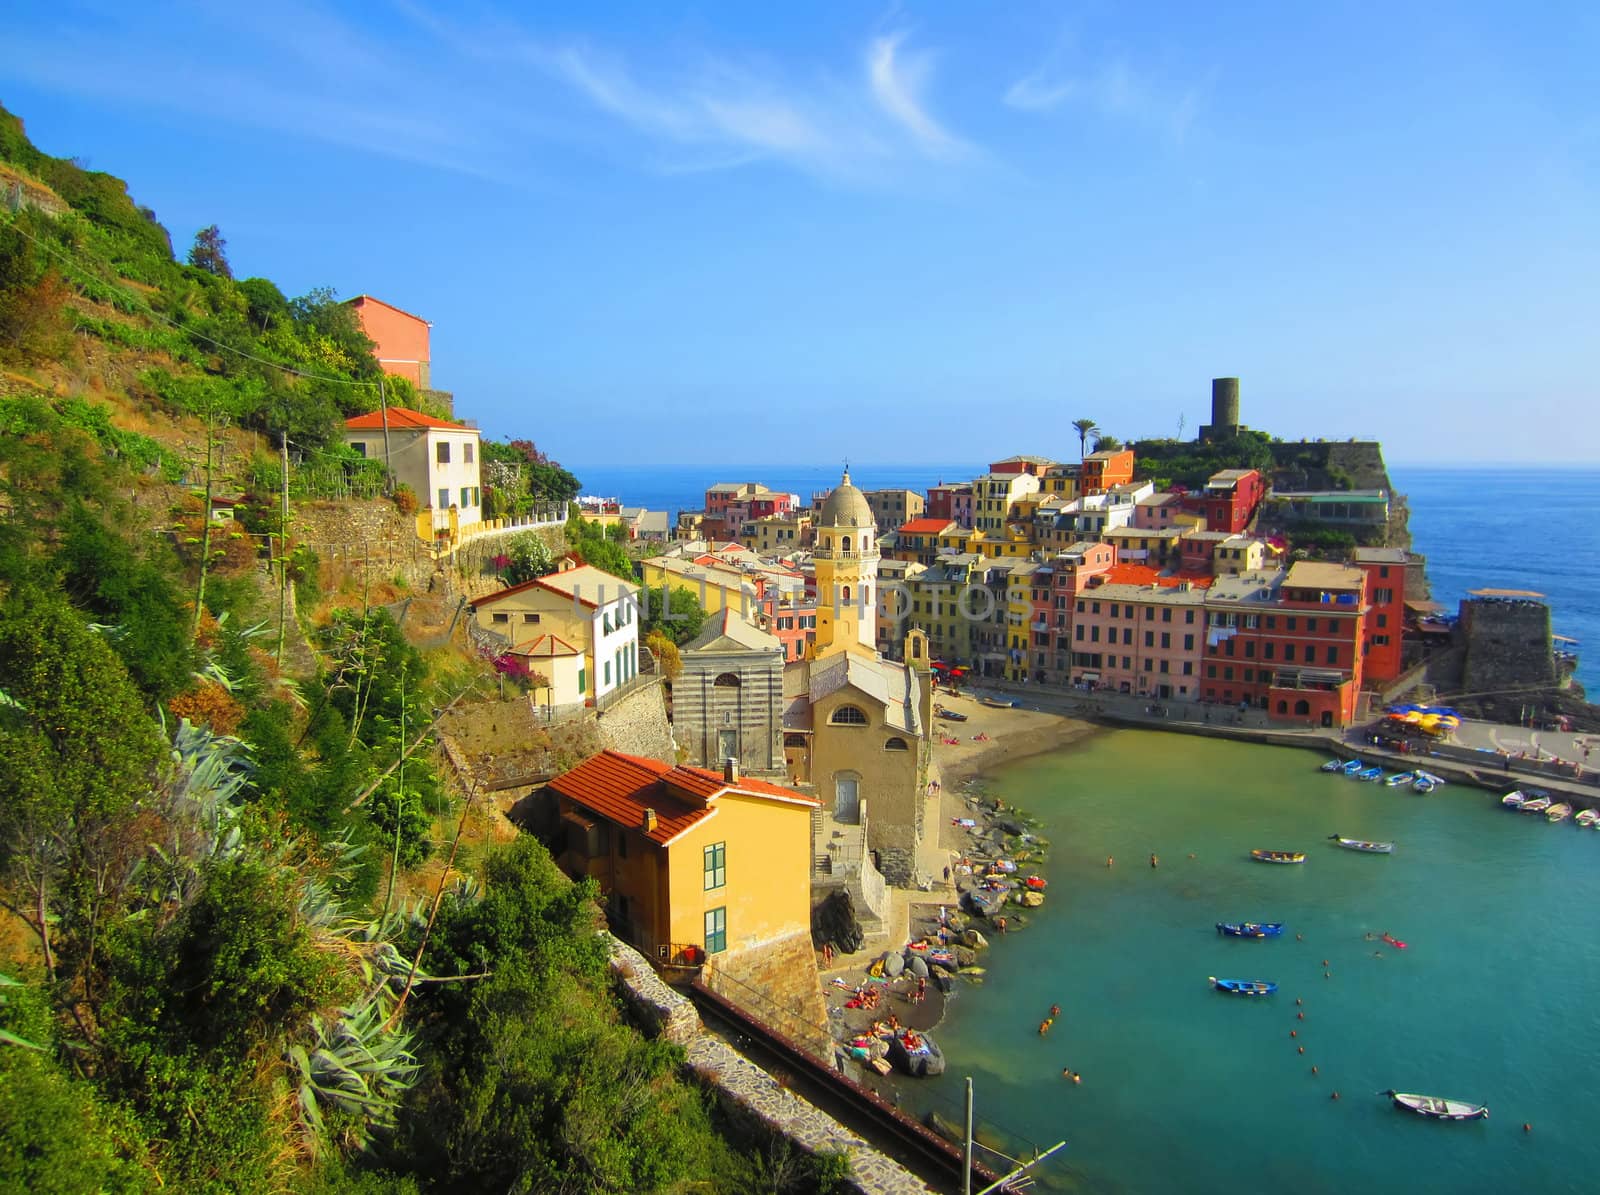 Village on Italian coast in Liguria                               